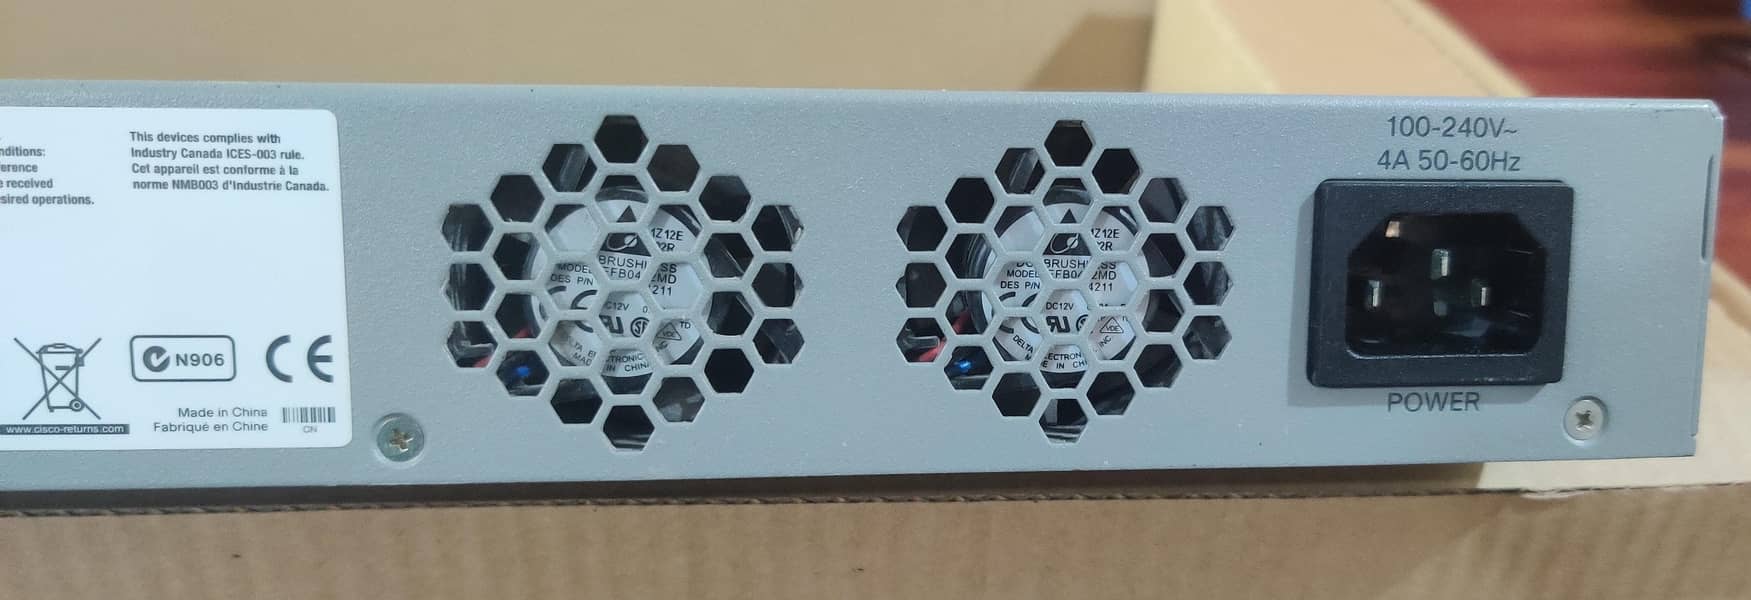 Cisco SF-300- 24P 24-port 10/100 PoE Managed Gigabit Switch (Open Box) 12